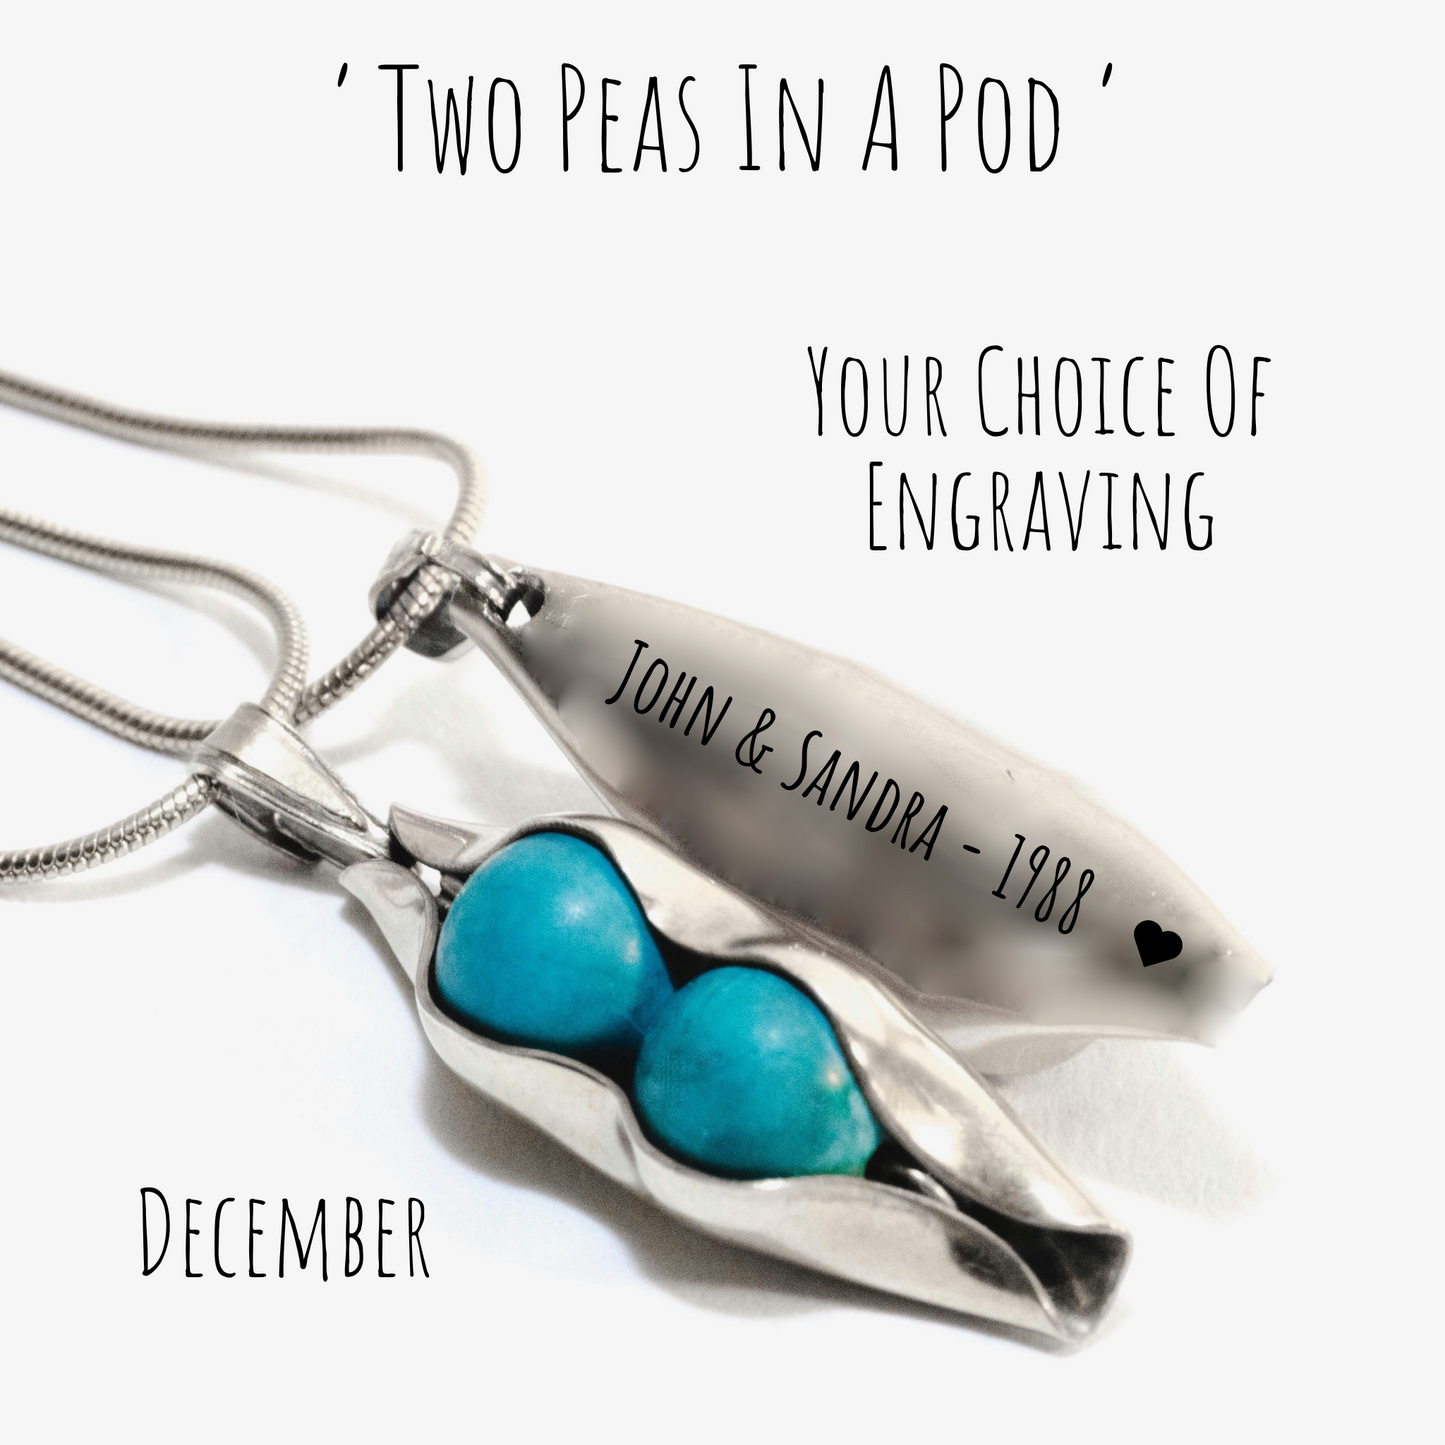 Jade anniversary | Two peas in a pod | Dark Jade | Custom Engraving | 35th wedding anniversary gift